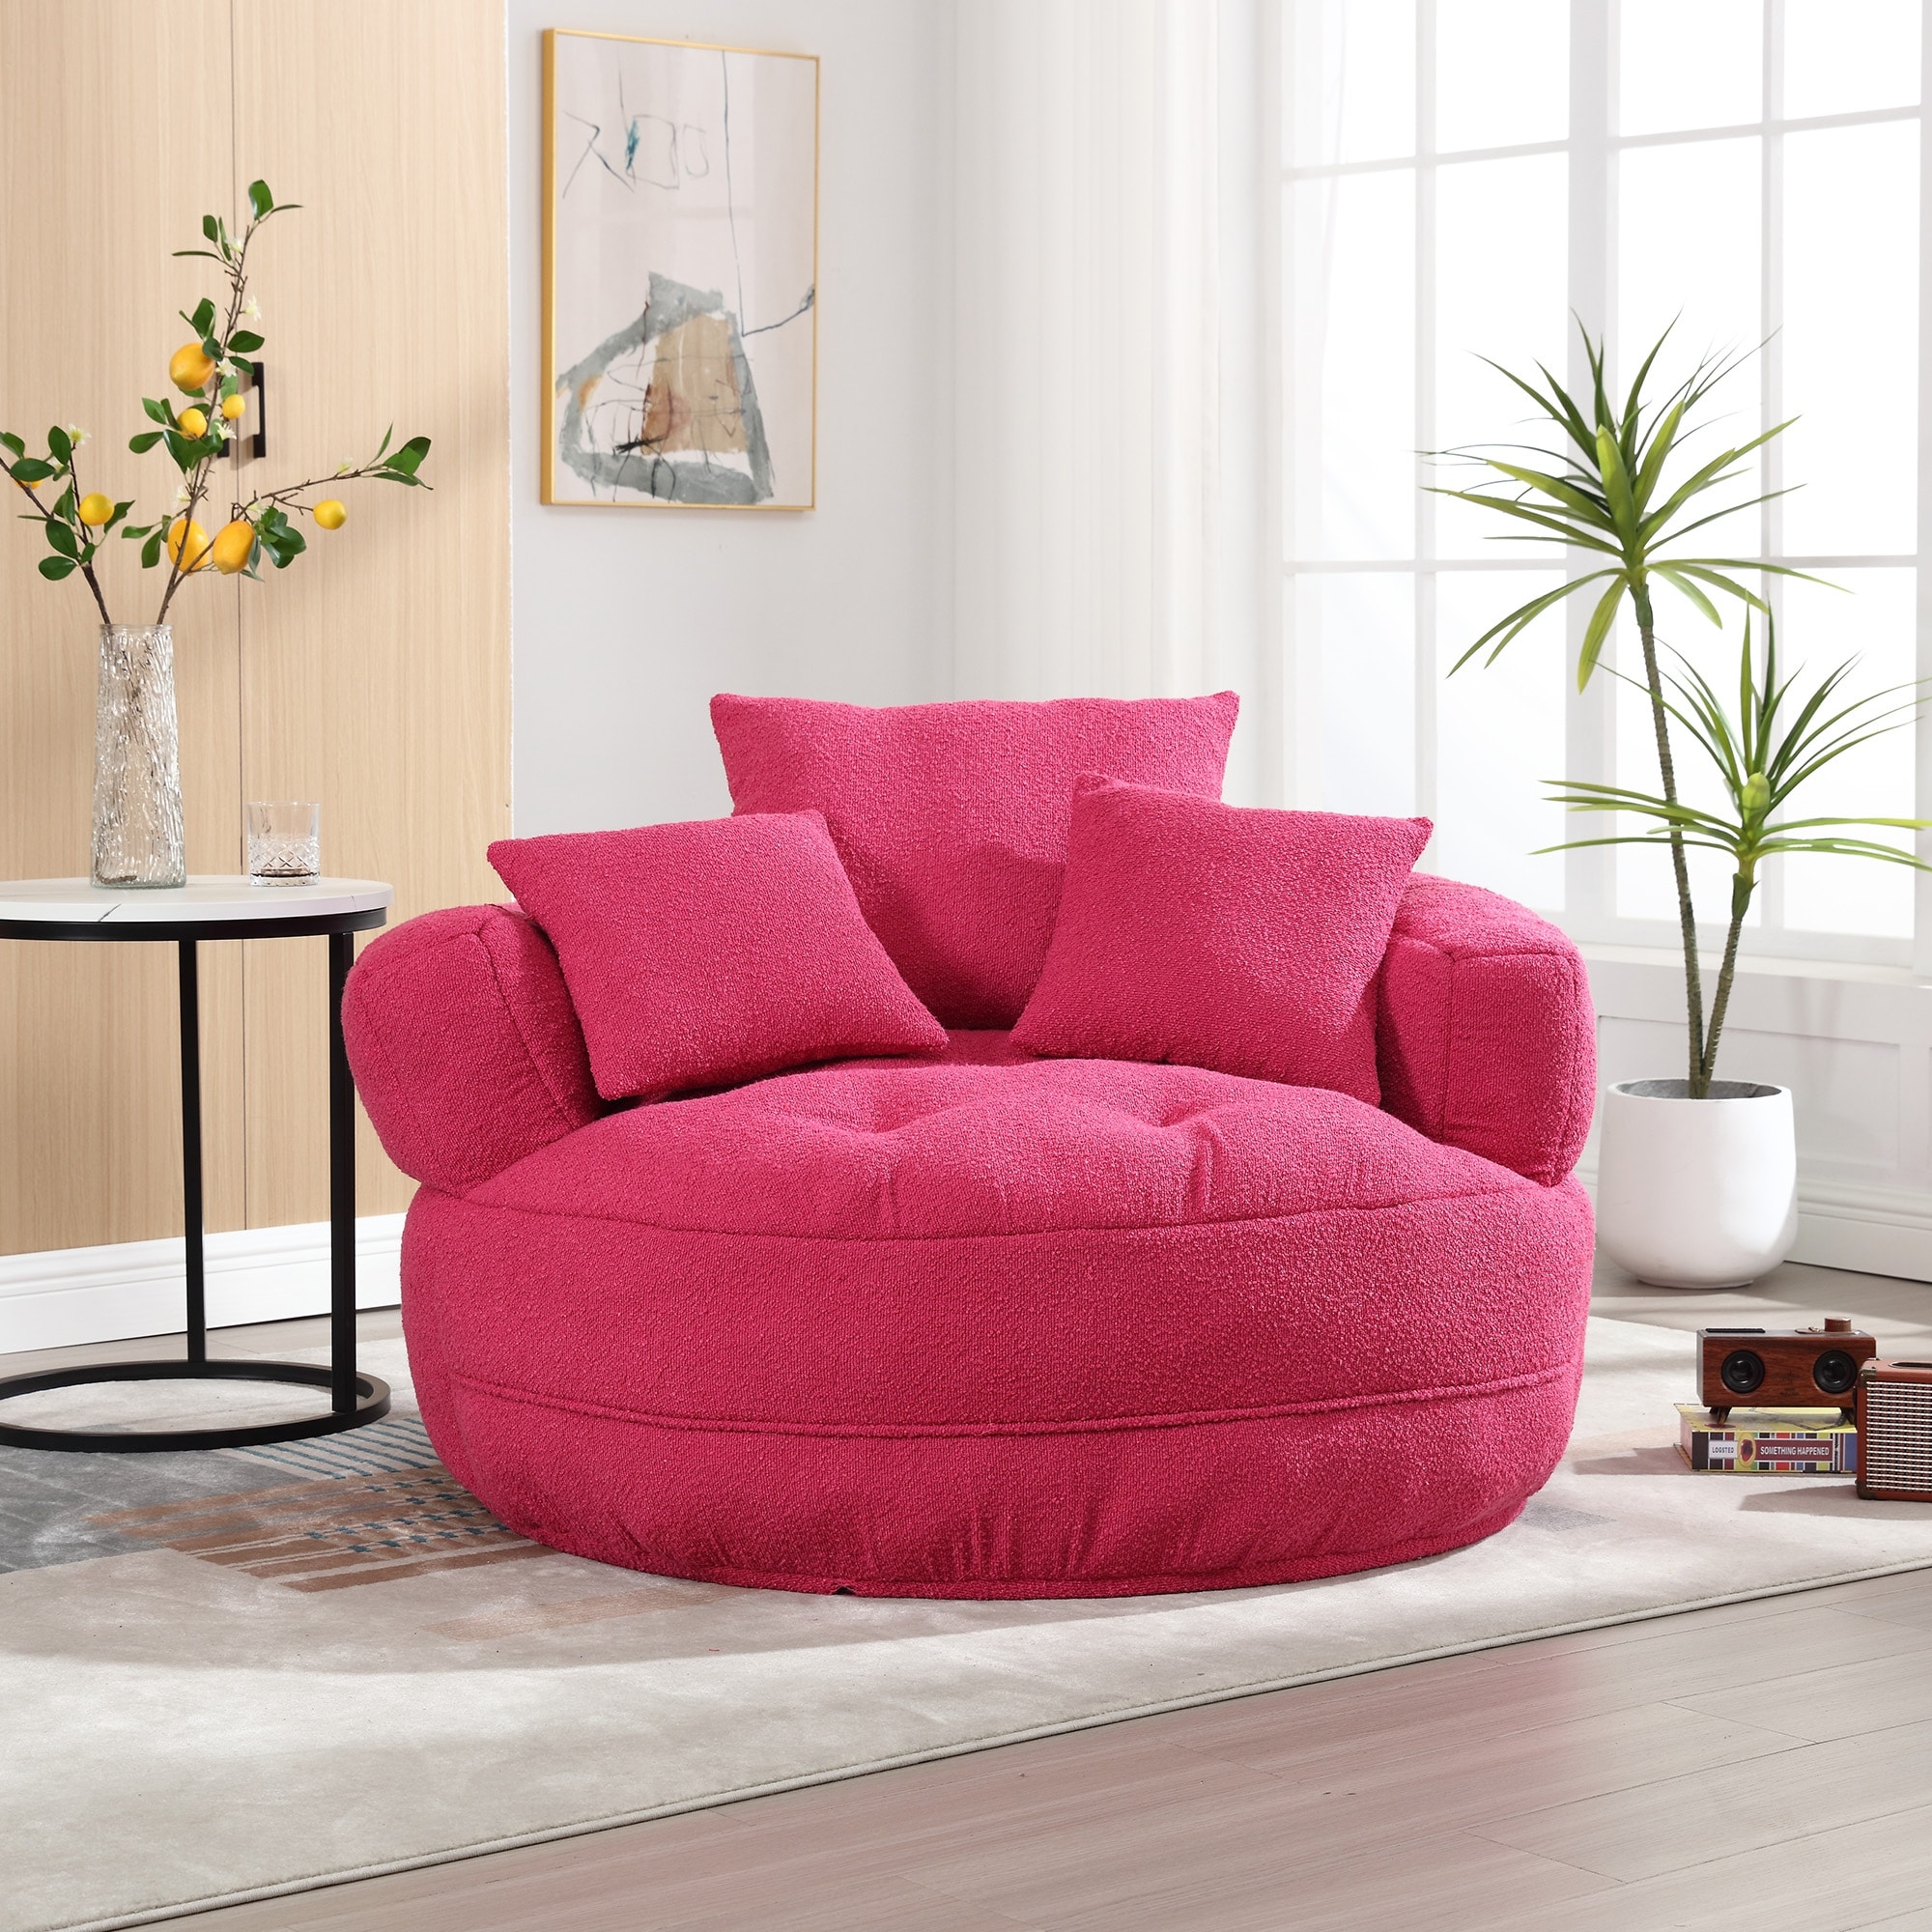 Indoor circular wide sofa and lazy sofa chair